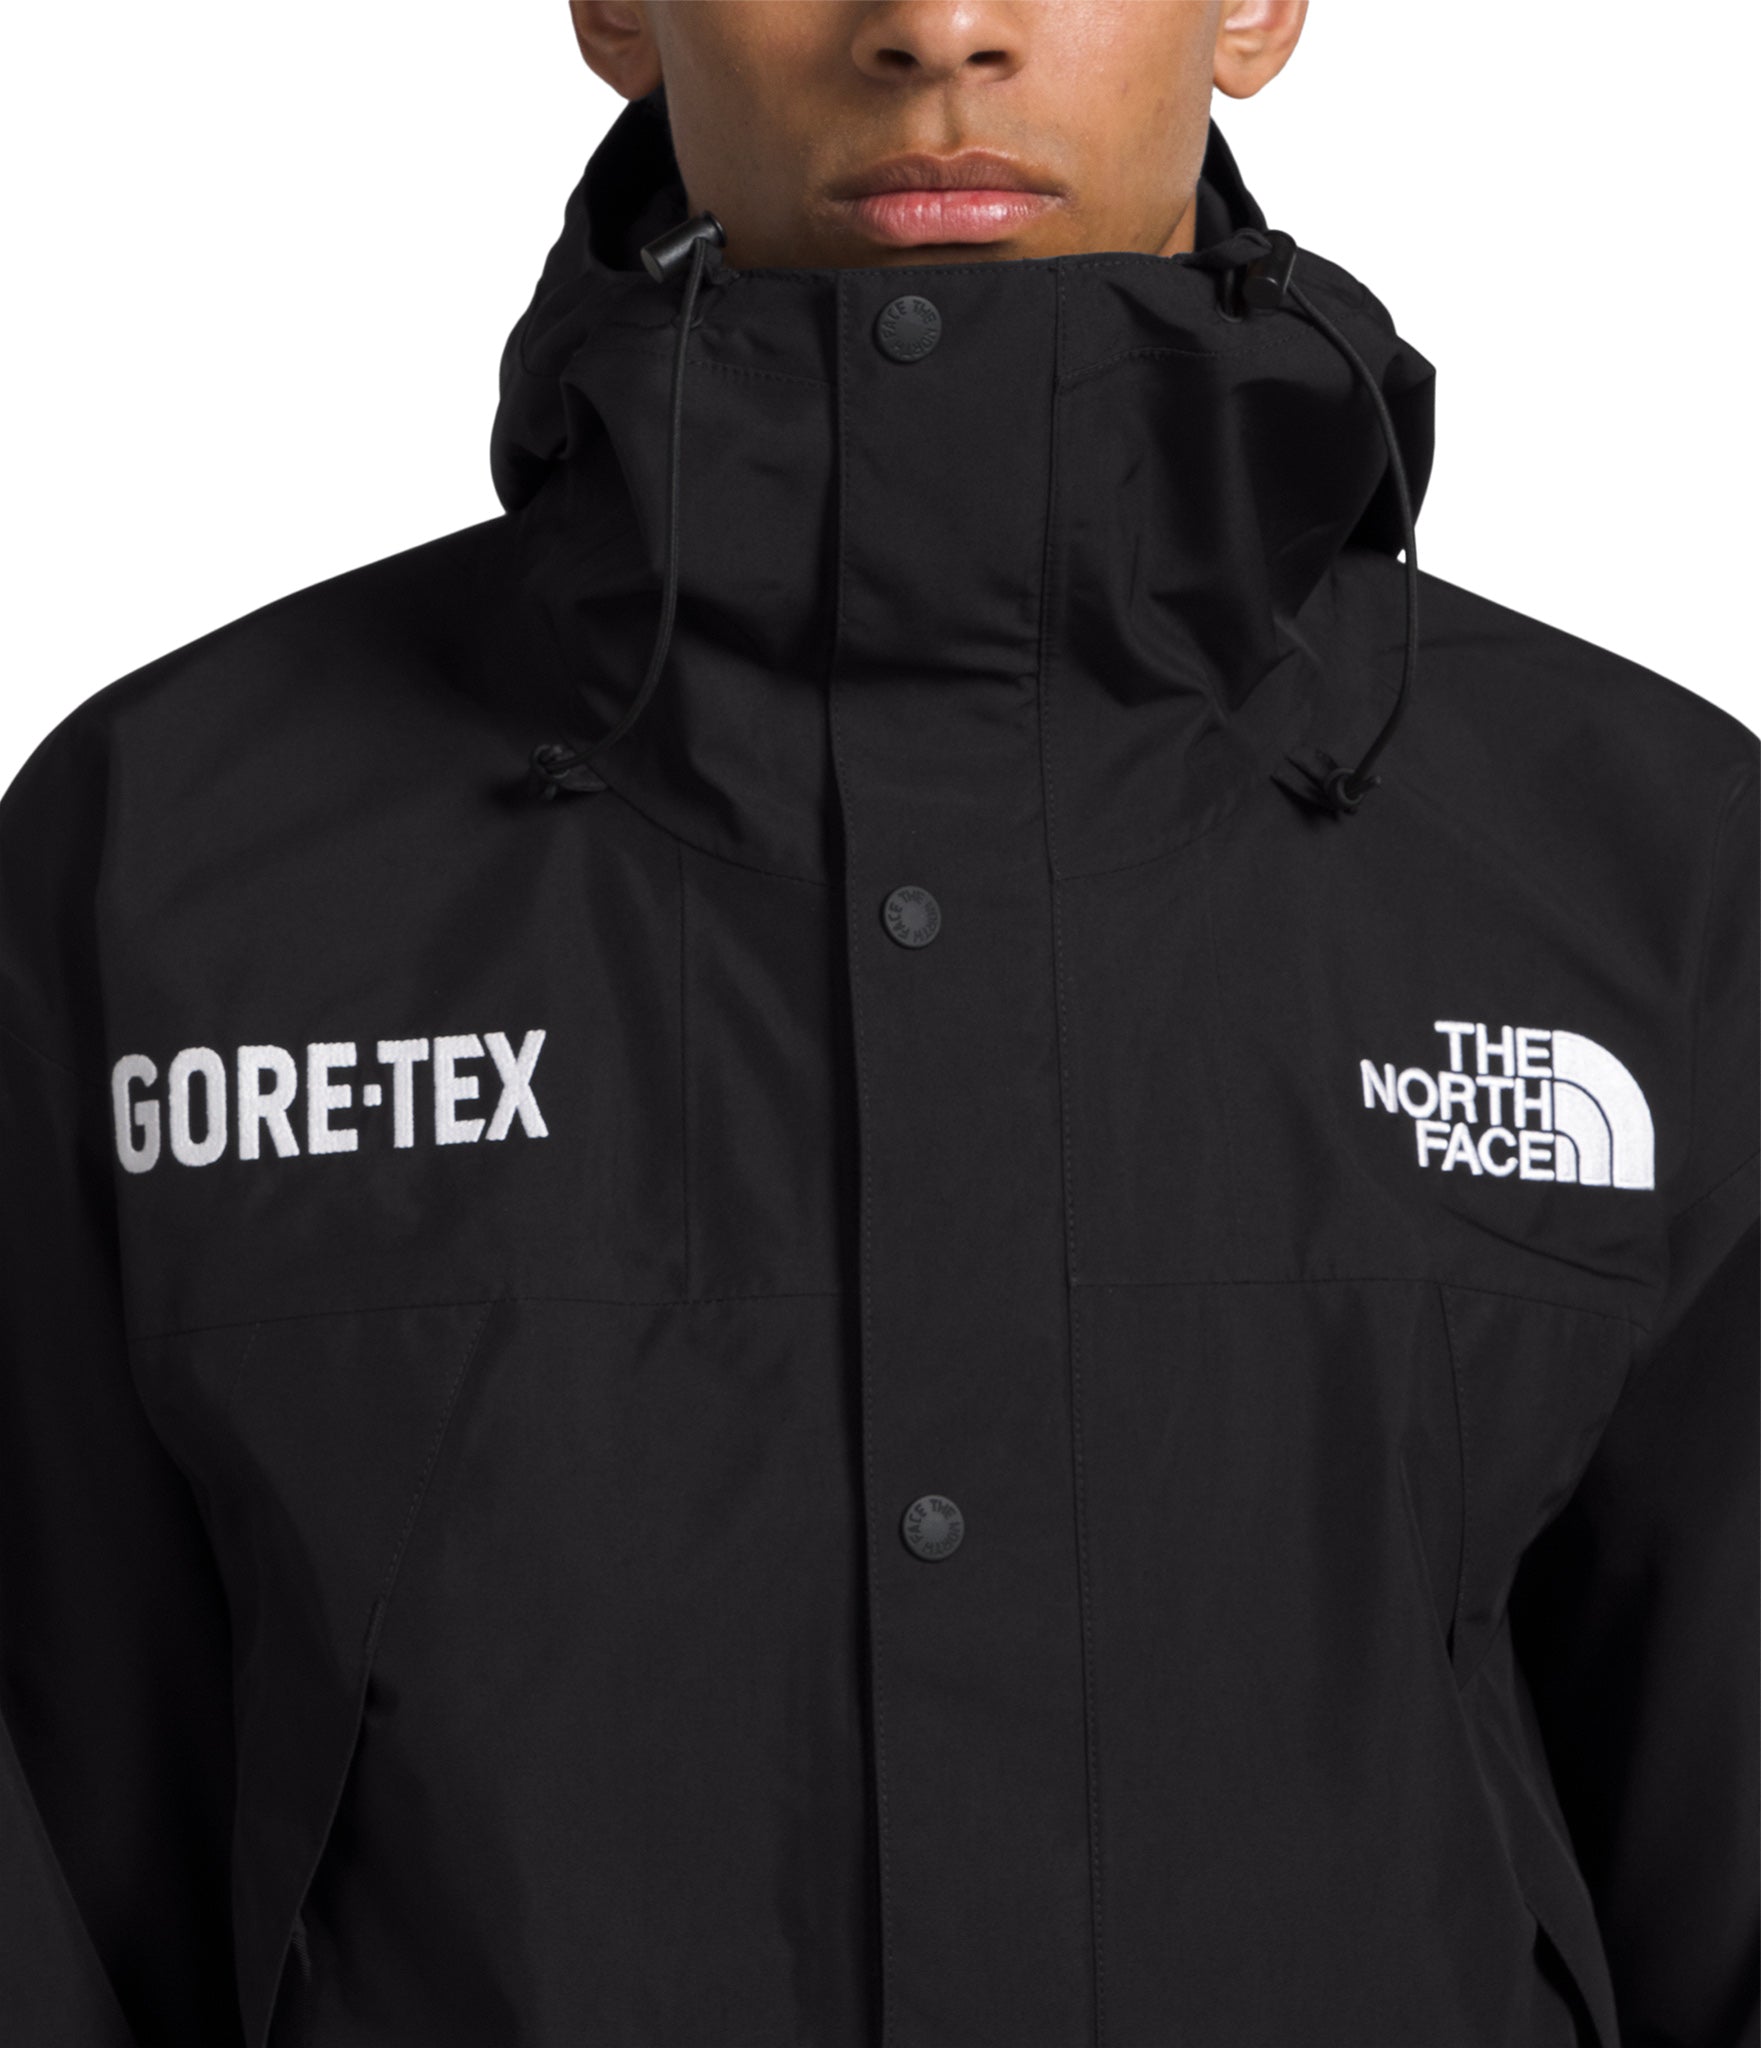 The North Face GTX Mountain Jacket   Men's   Altitude Sports